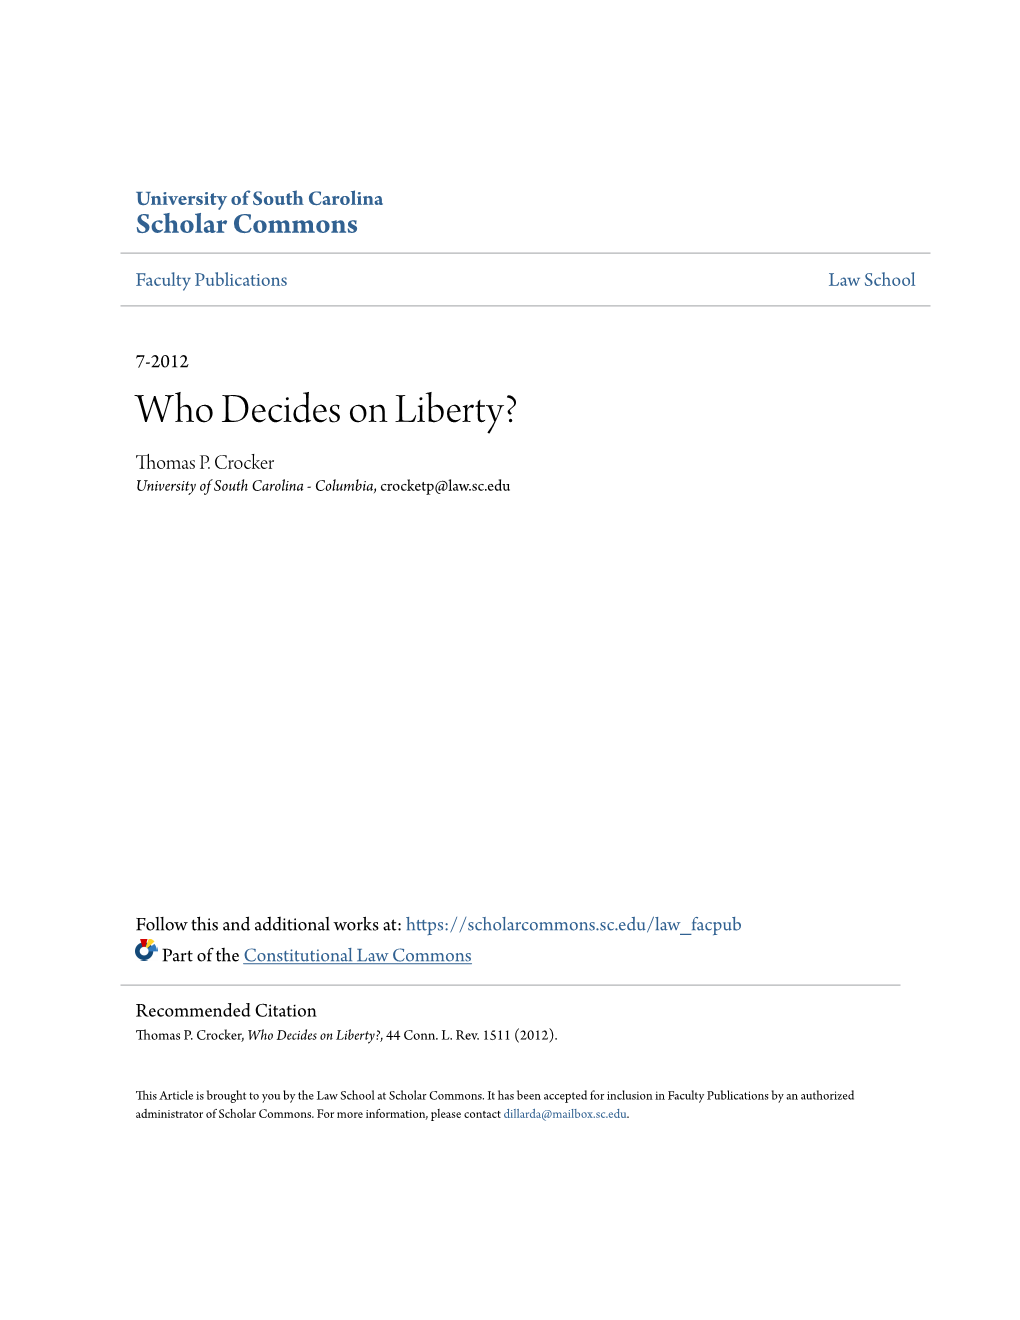 Who Decides on Liberty? Thomas P